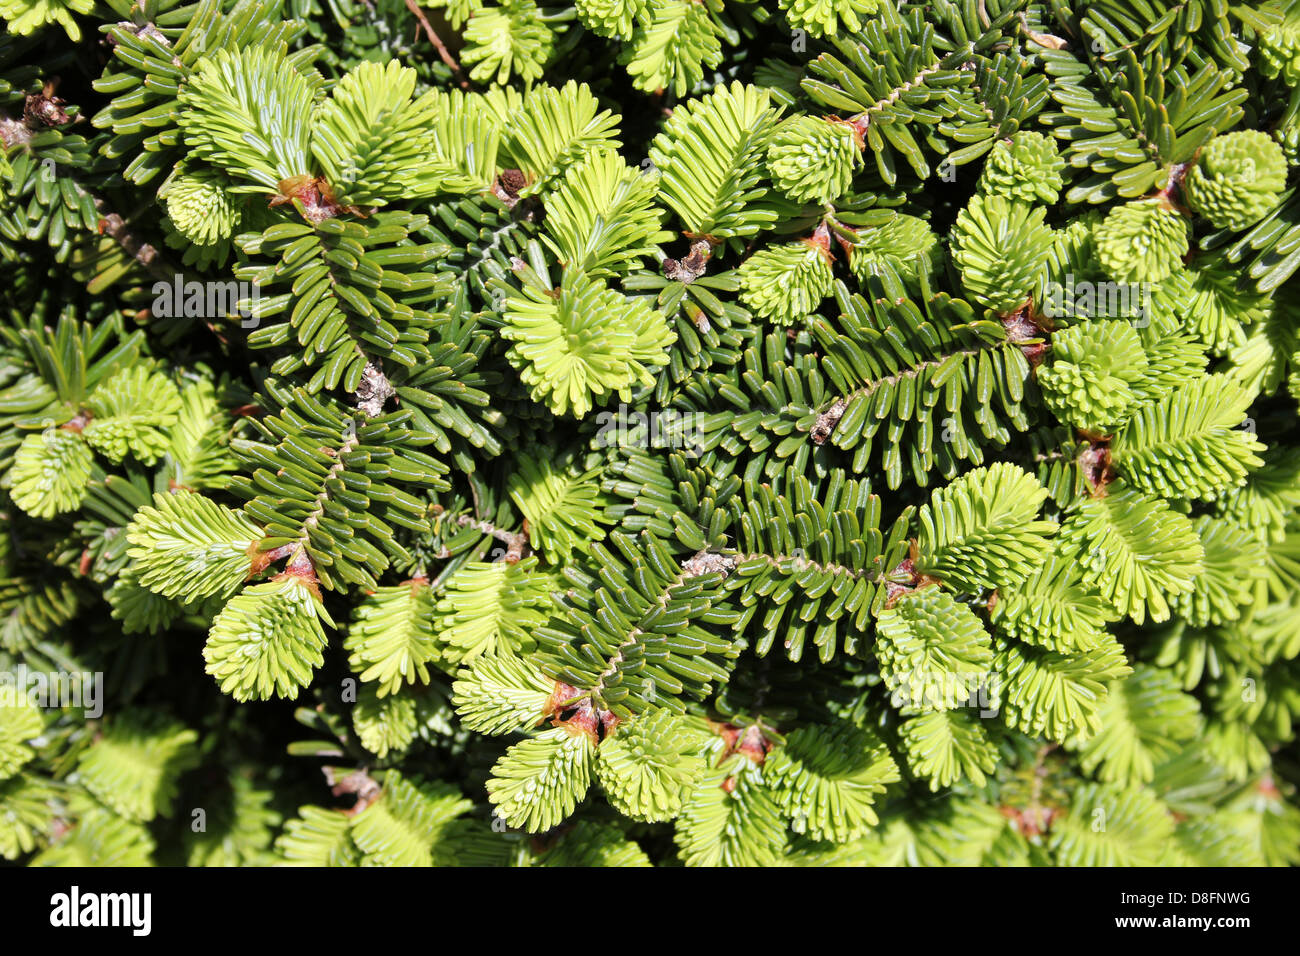 Pine Needle Details Evergreen Garden Shrub Stock Photo